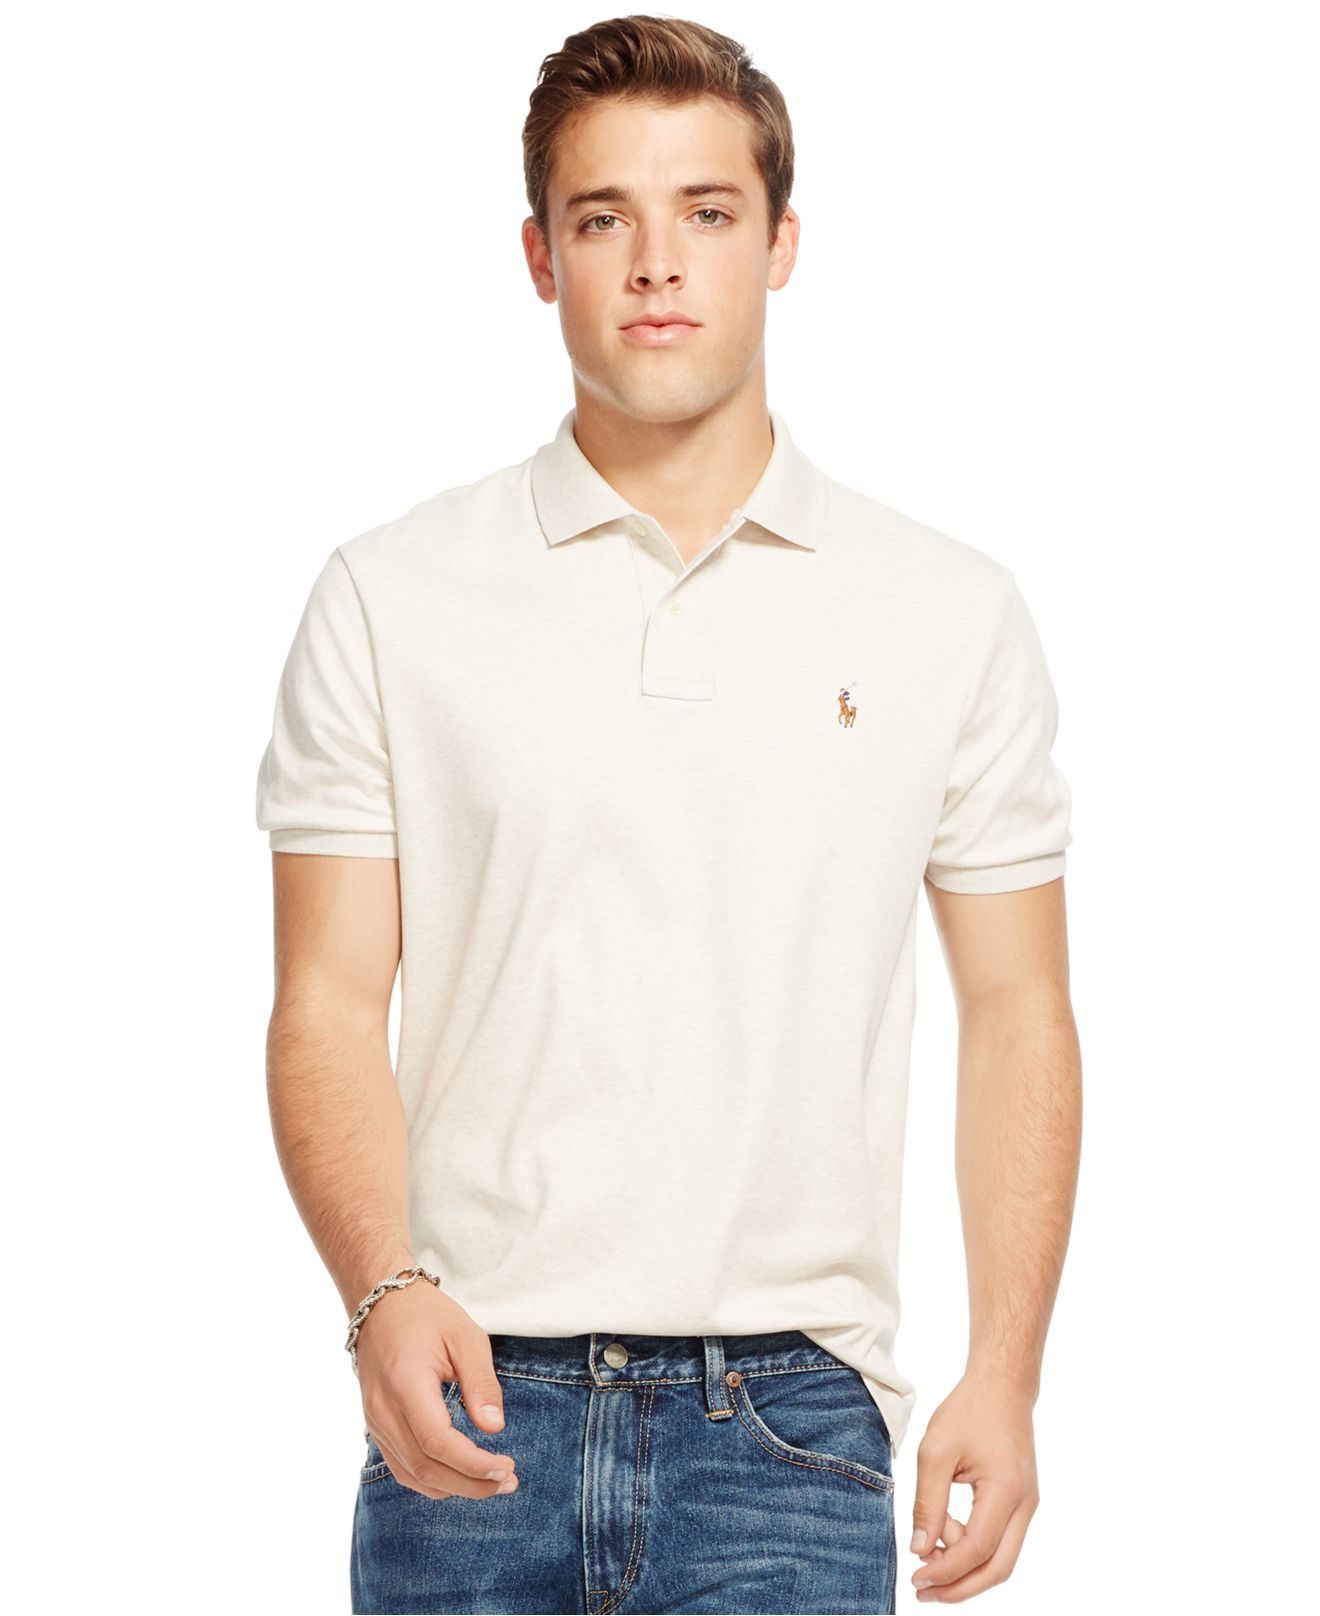 Lyst - Polo Ralph Lauren Pima Cotton Polo Shirt in Gray for Men